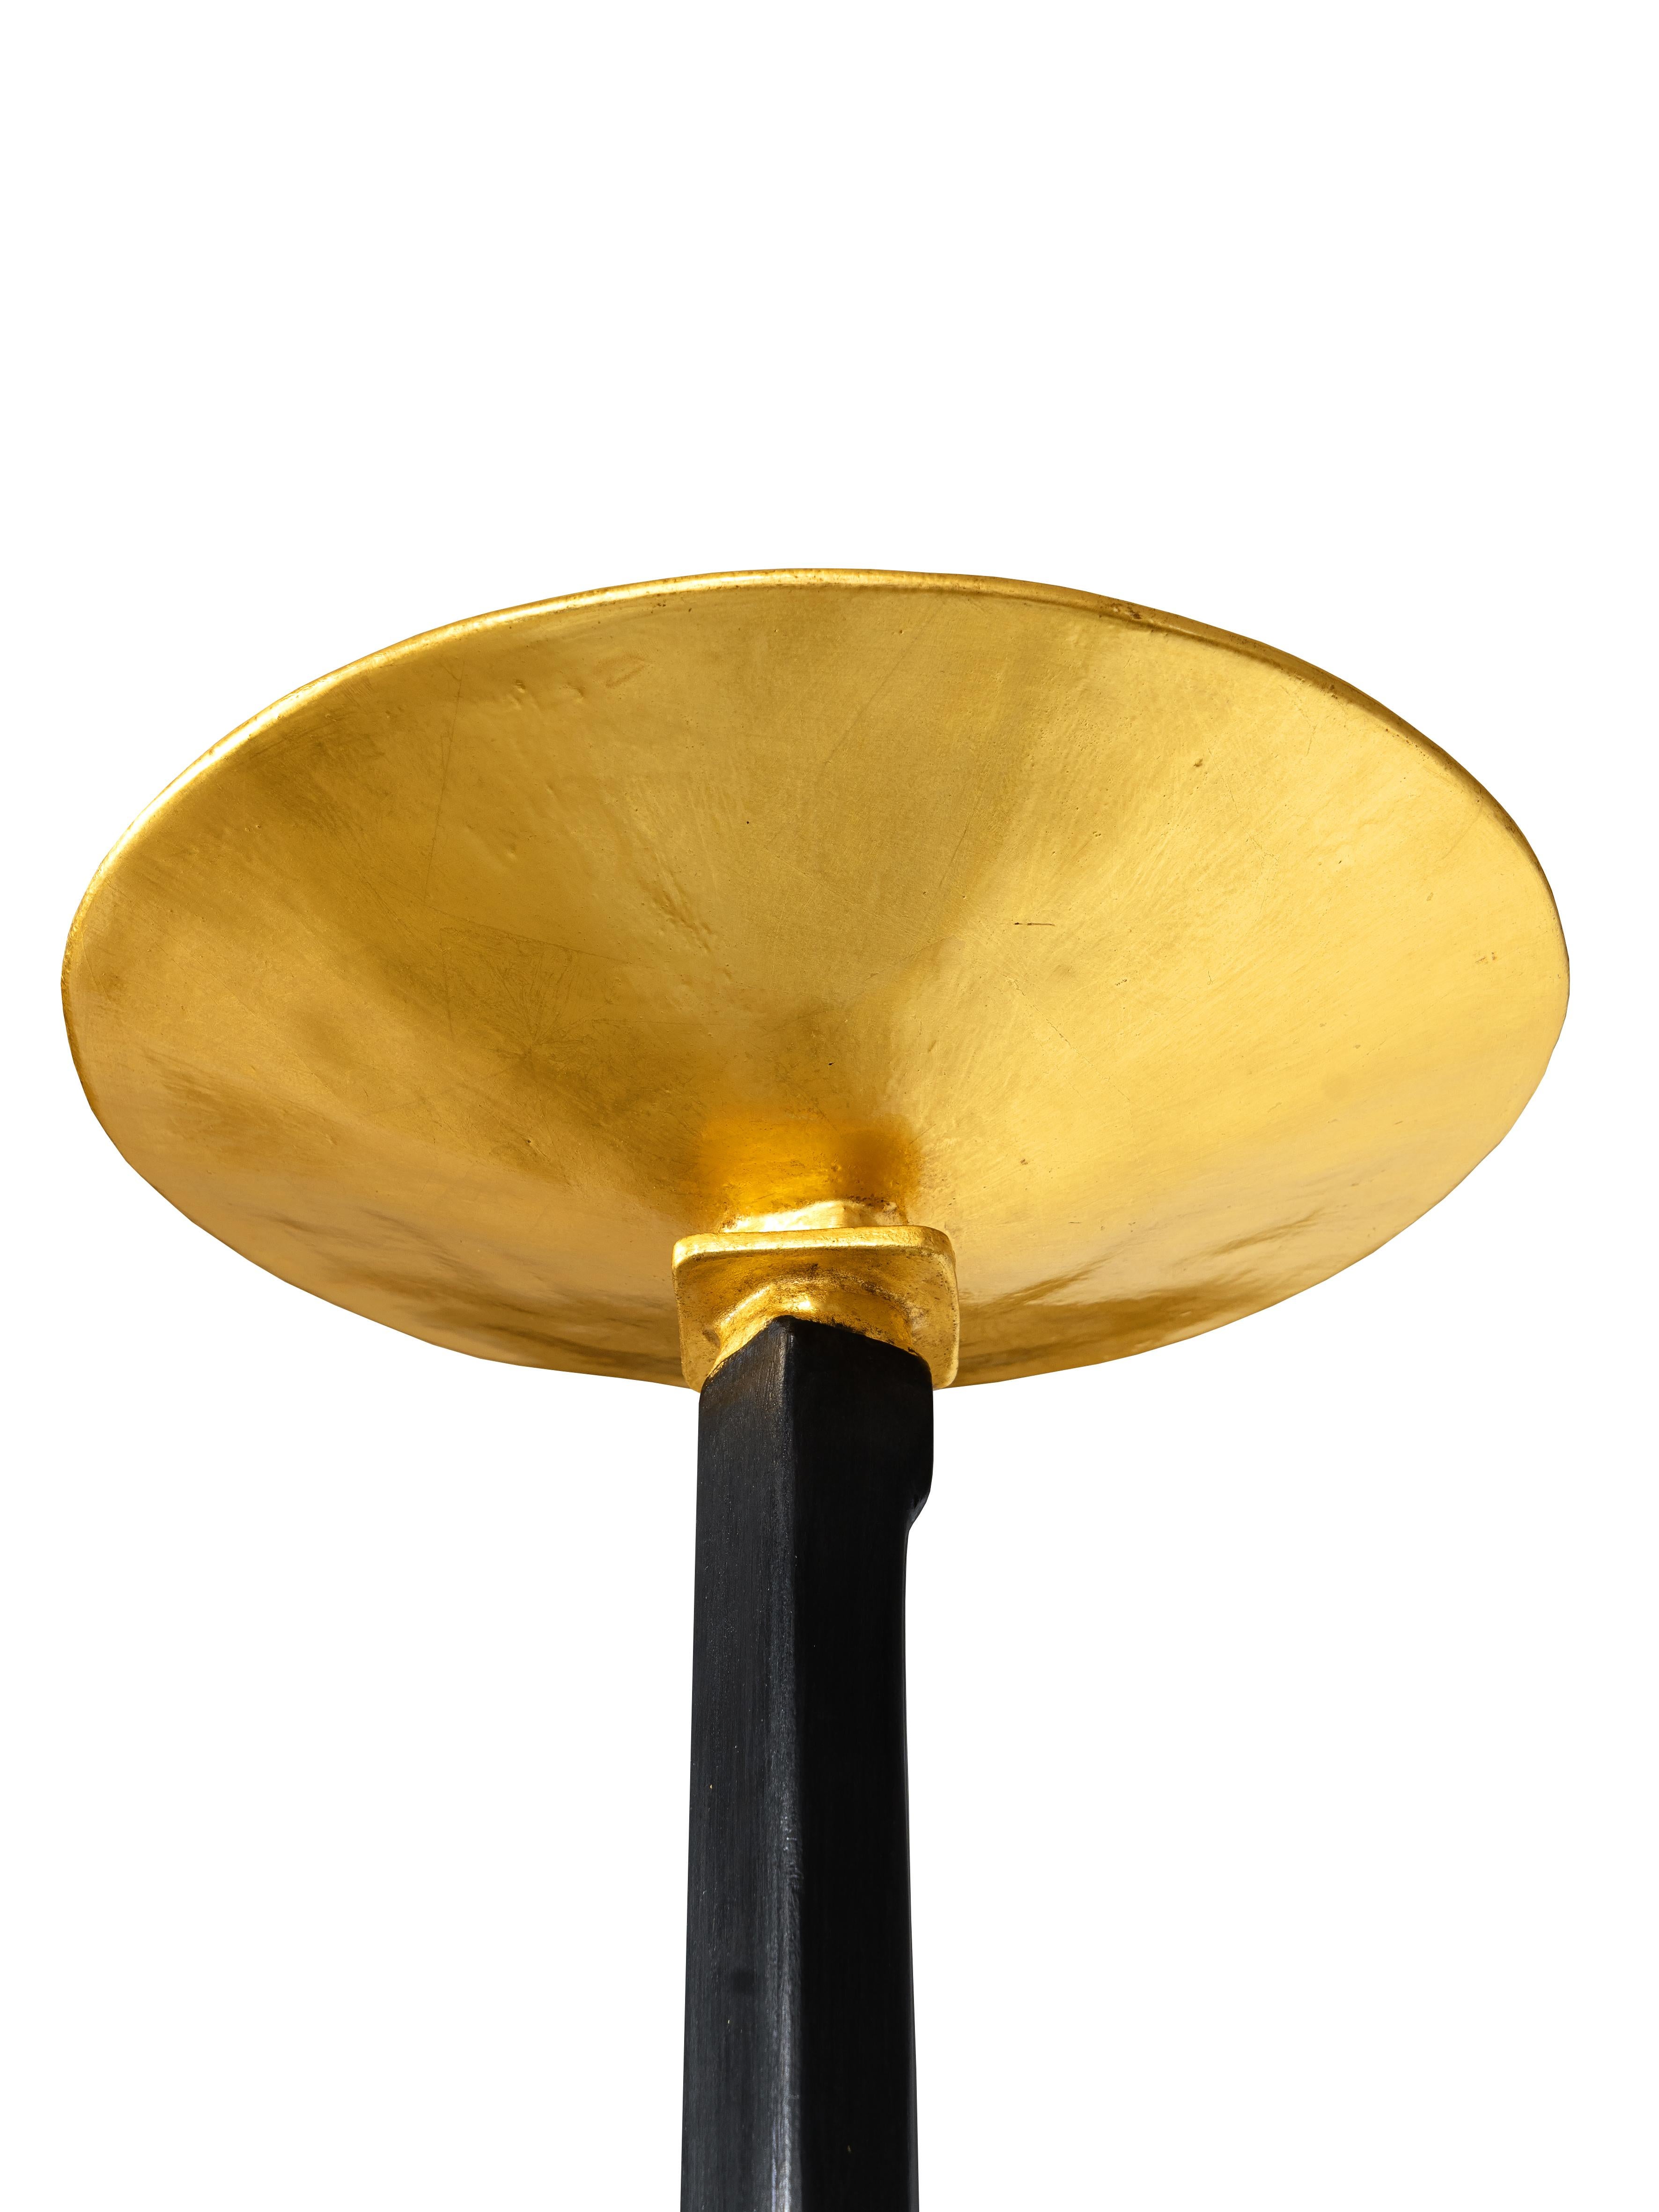 German Large Panteon Floor Lamp, Black Plaster Finish with 23K yellow Gold, Benediko For Sale